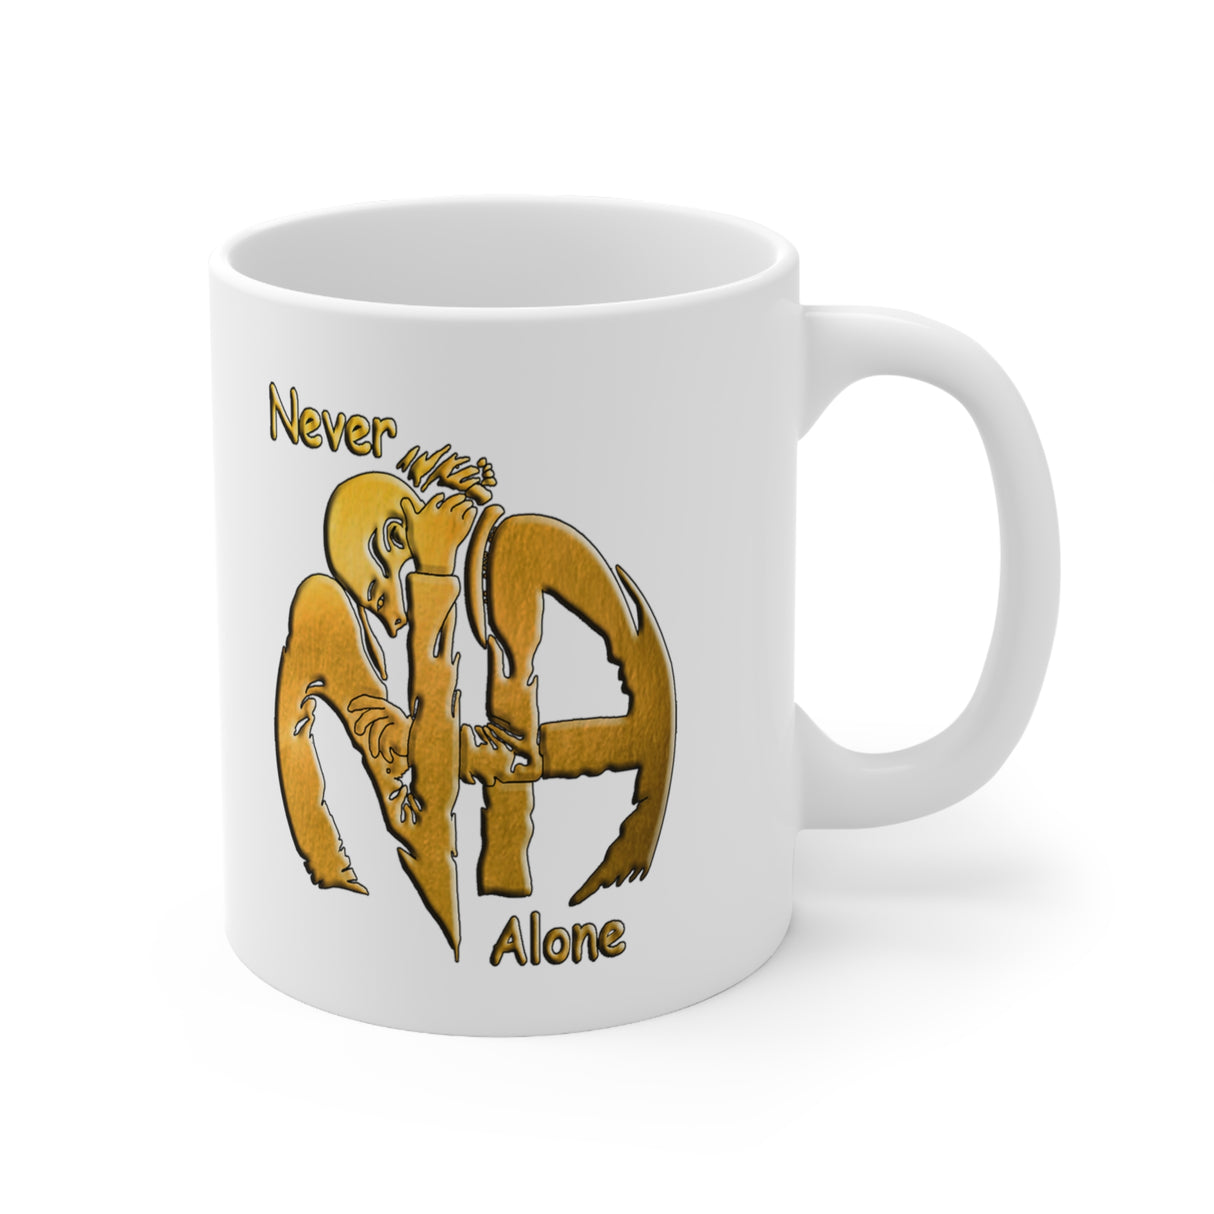 Hugs Never Alone 11oz Ceramic Mug